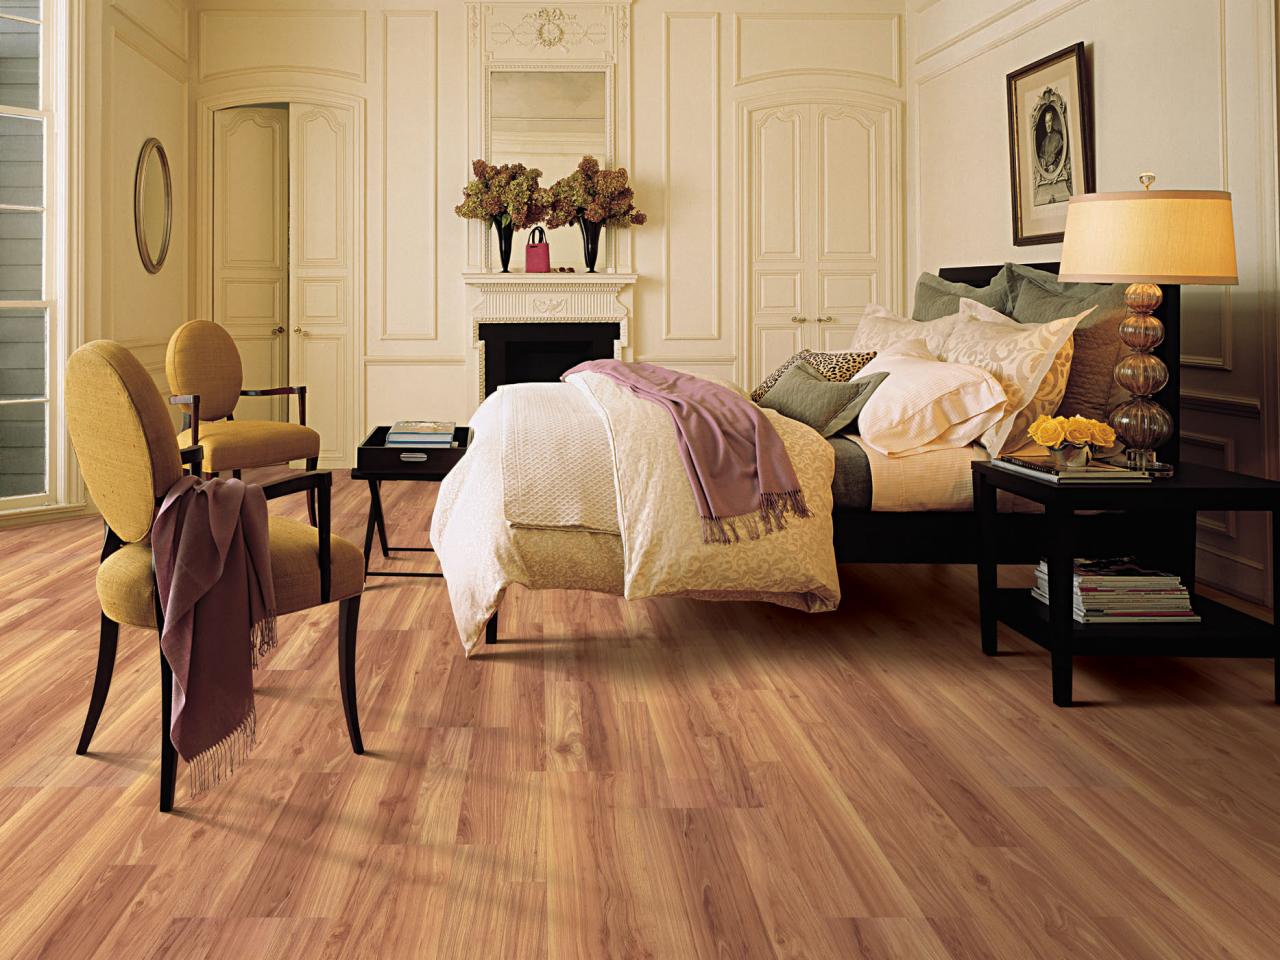 Flooring Er S Guide, Hardwood Floor With A Queen Christina